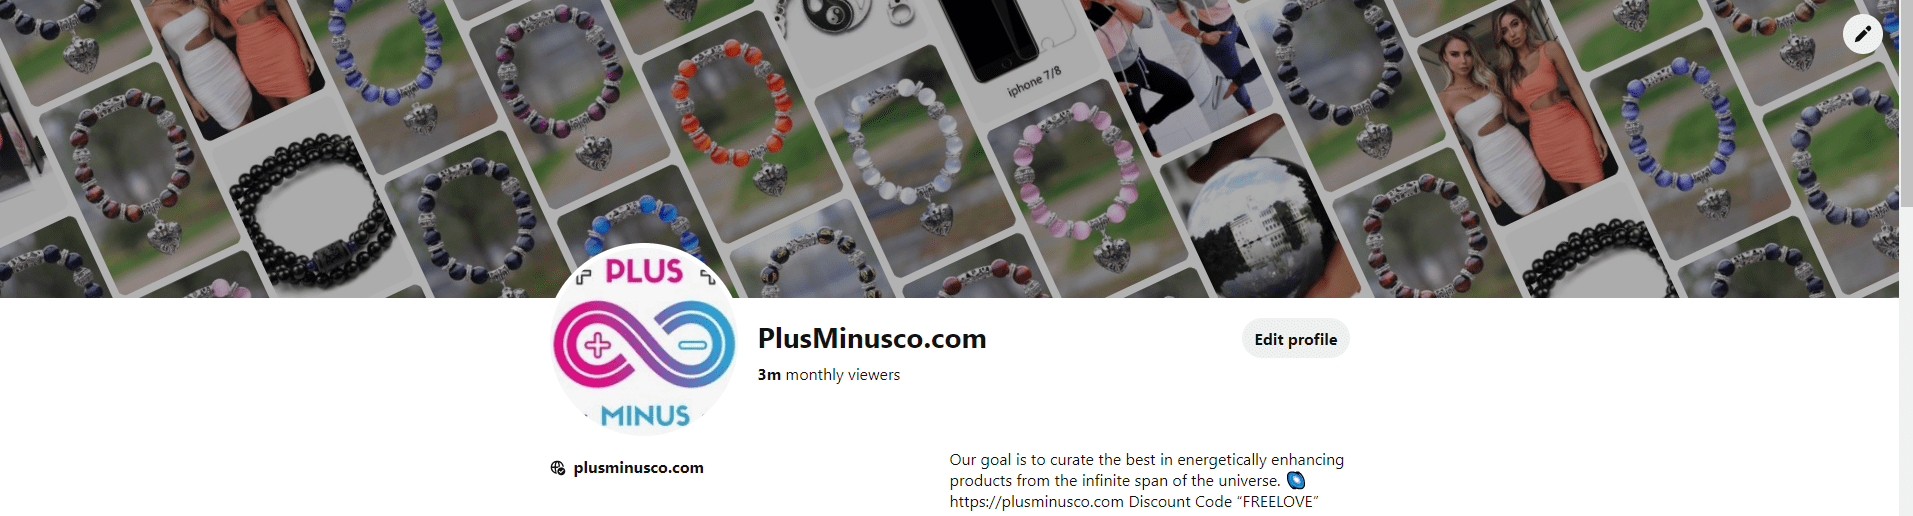 Rannekorut - plusminusco.com